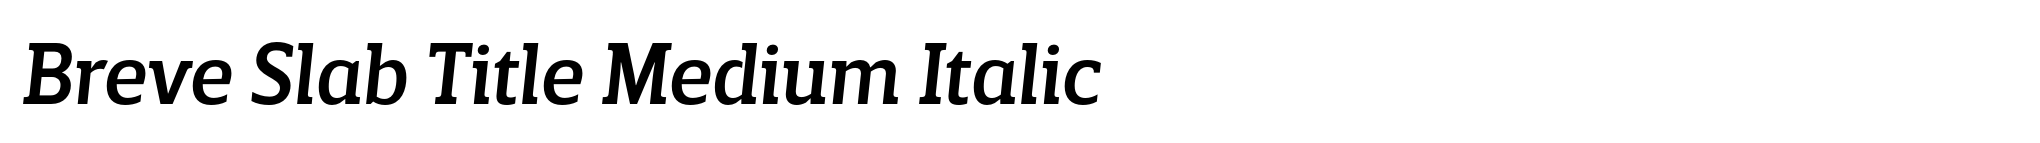 Breve Slab Title Medium Italic image